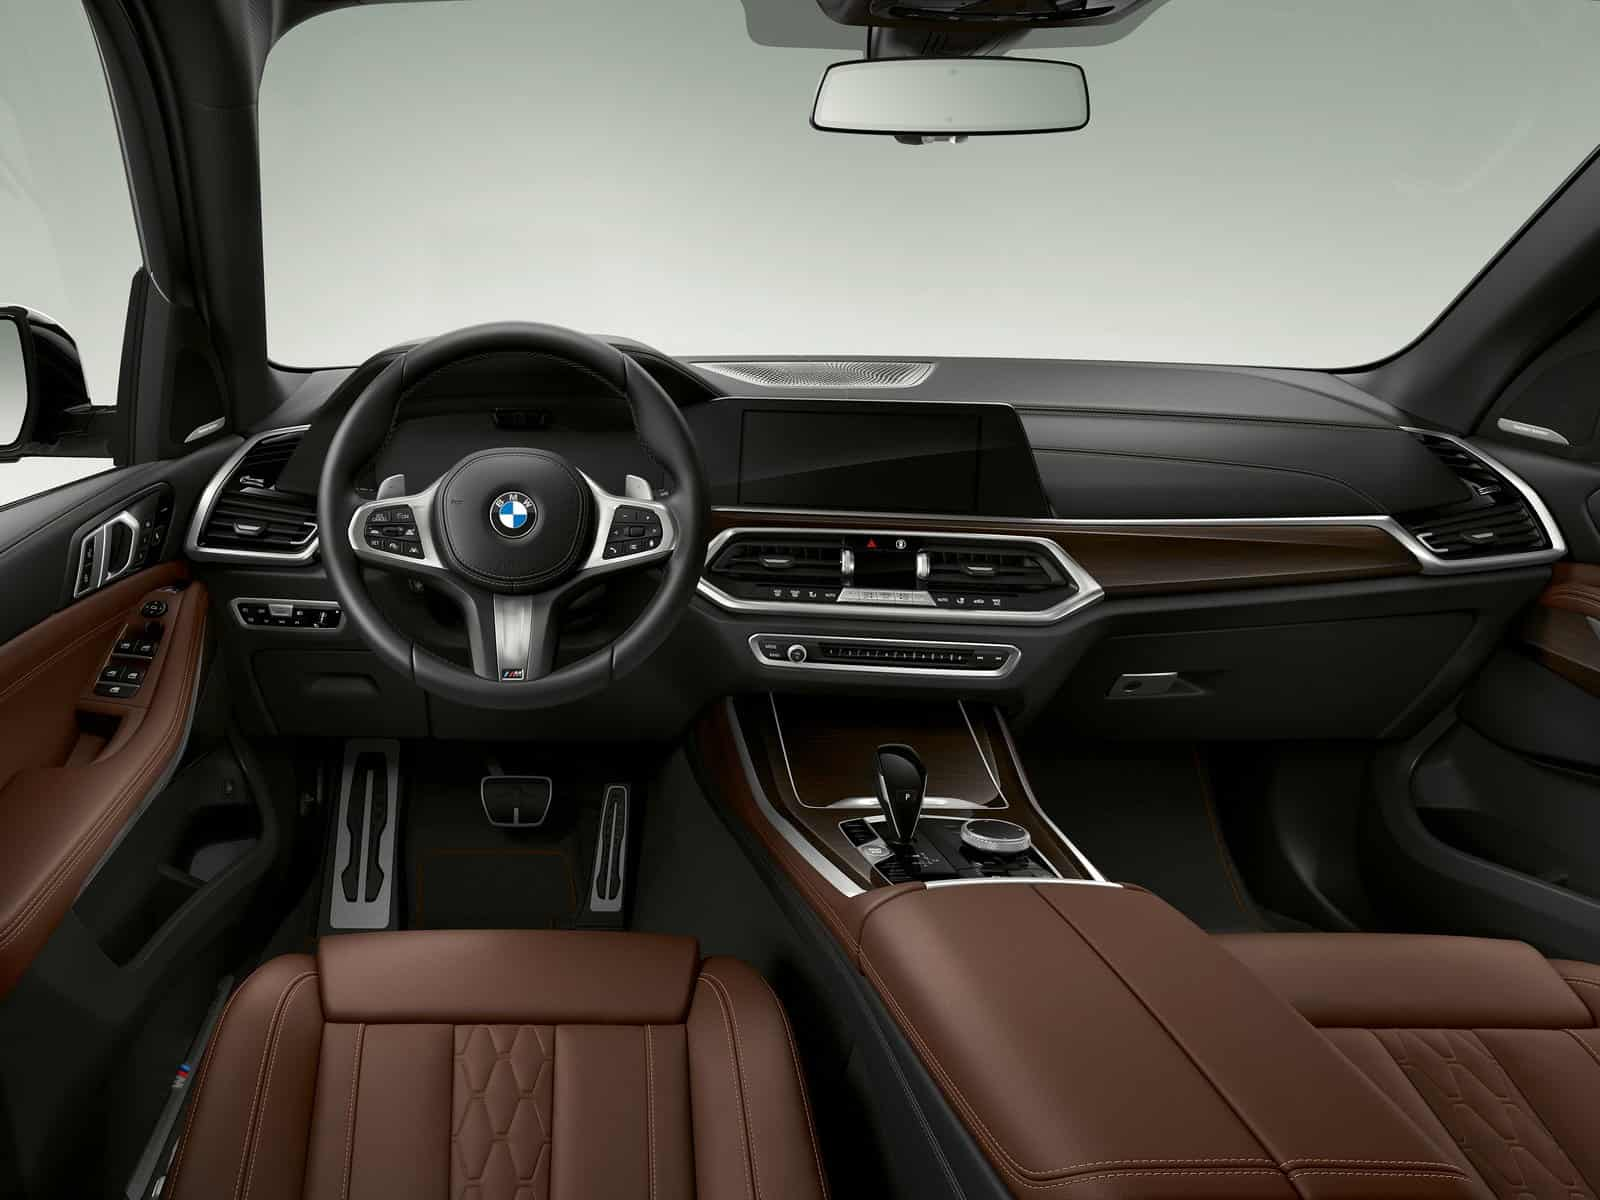 BMW X5 Plug-In Hybrid Interior - Best Luxury Hybrid SUV